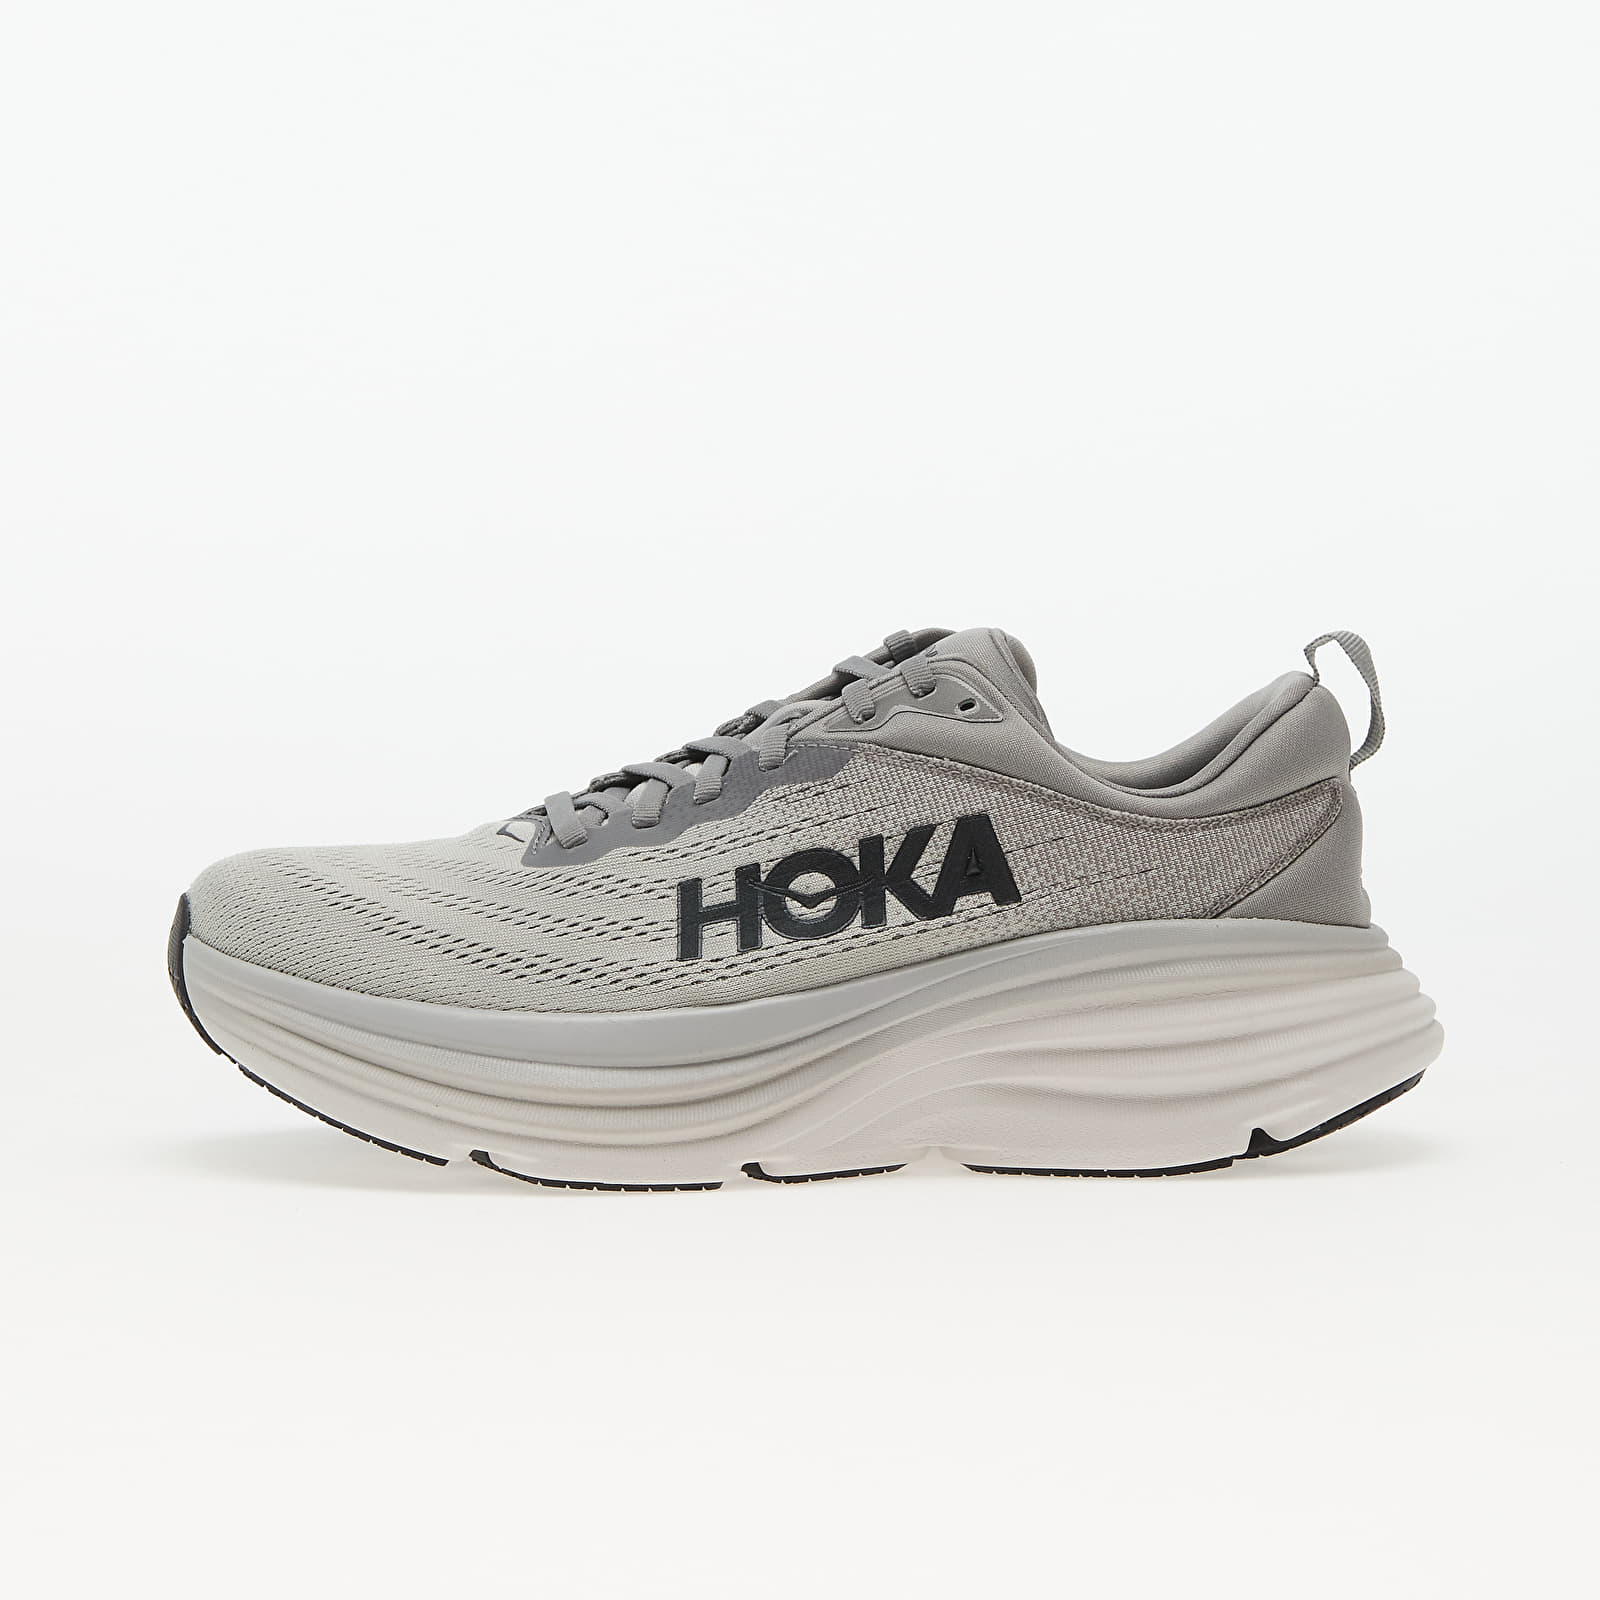 Men's shoes Hoka® M Bondi 8 Wide Sharkskin/ Harbor Mist